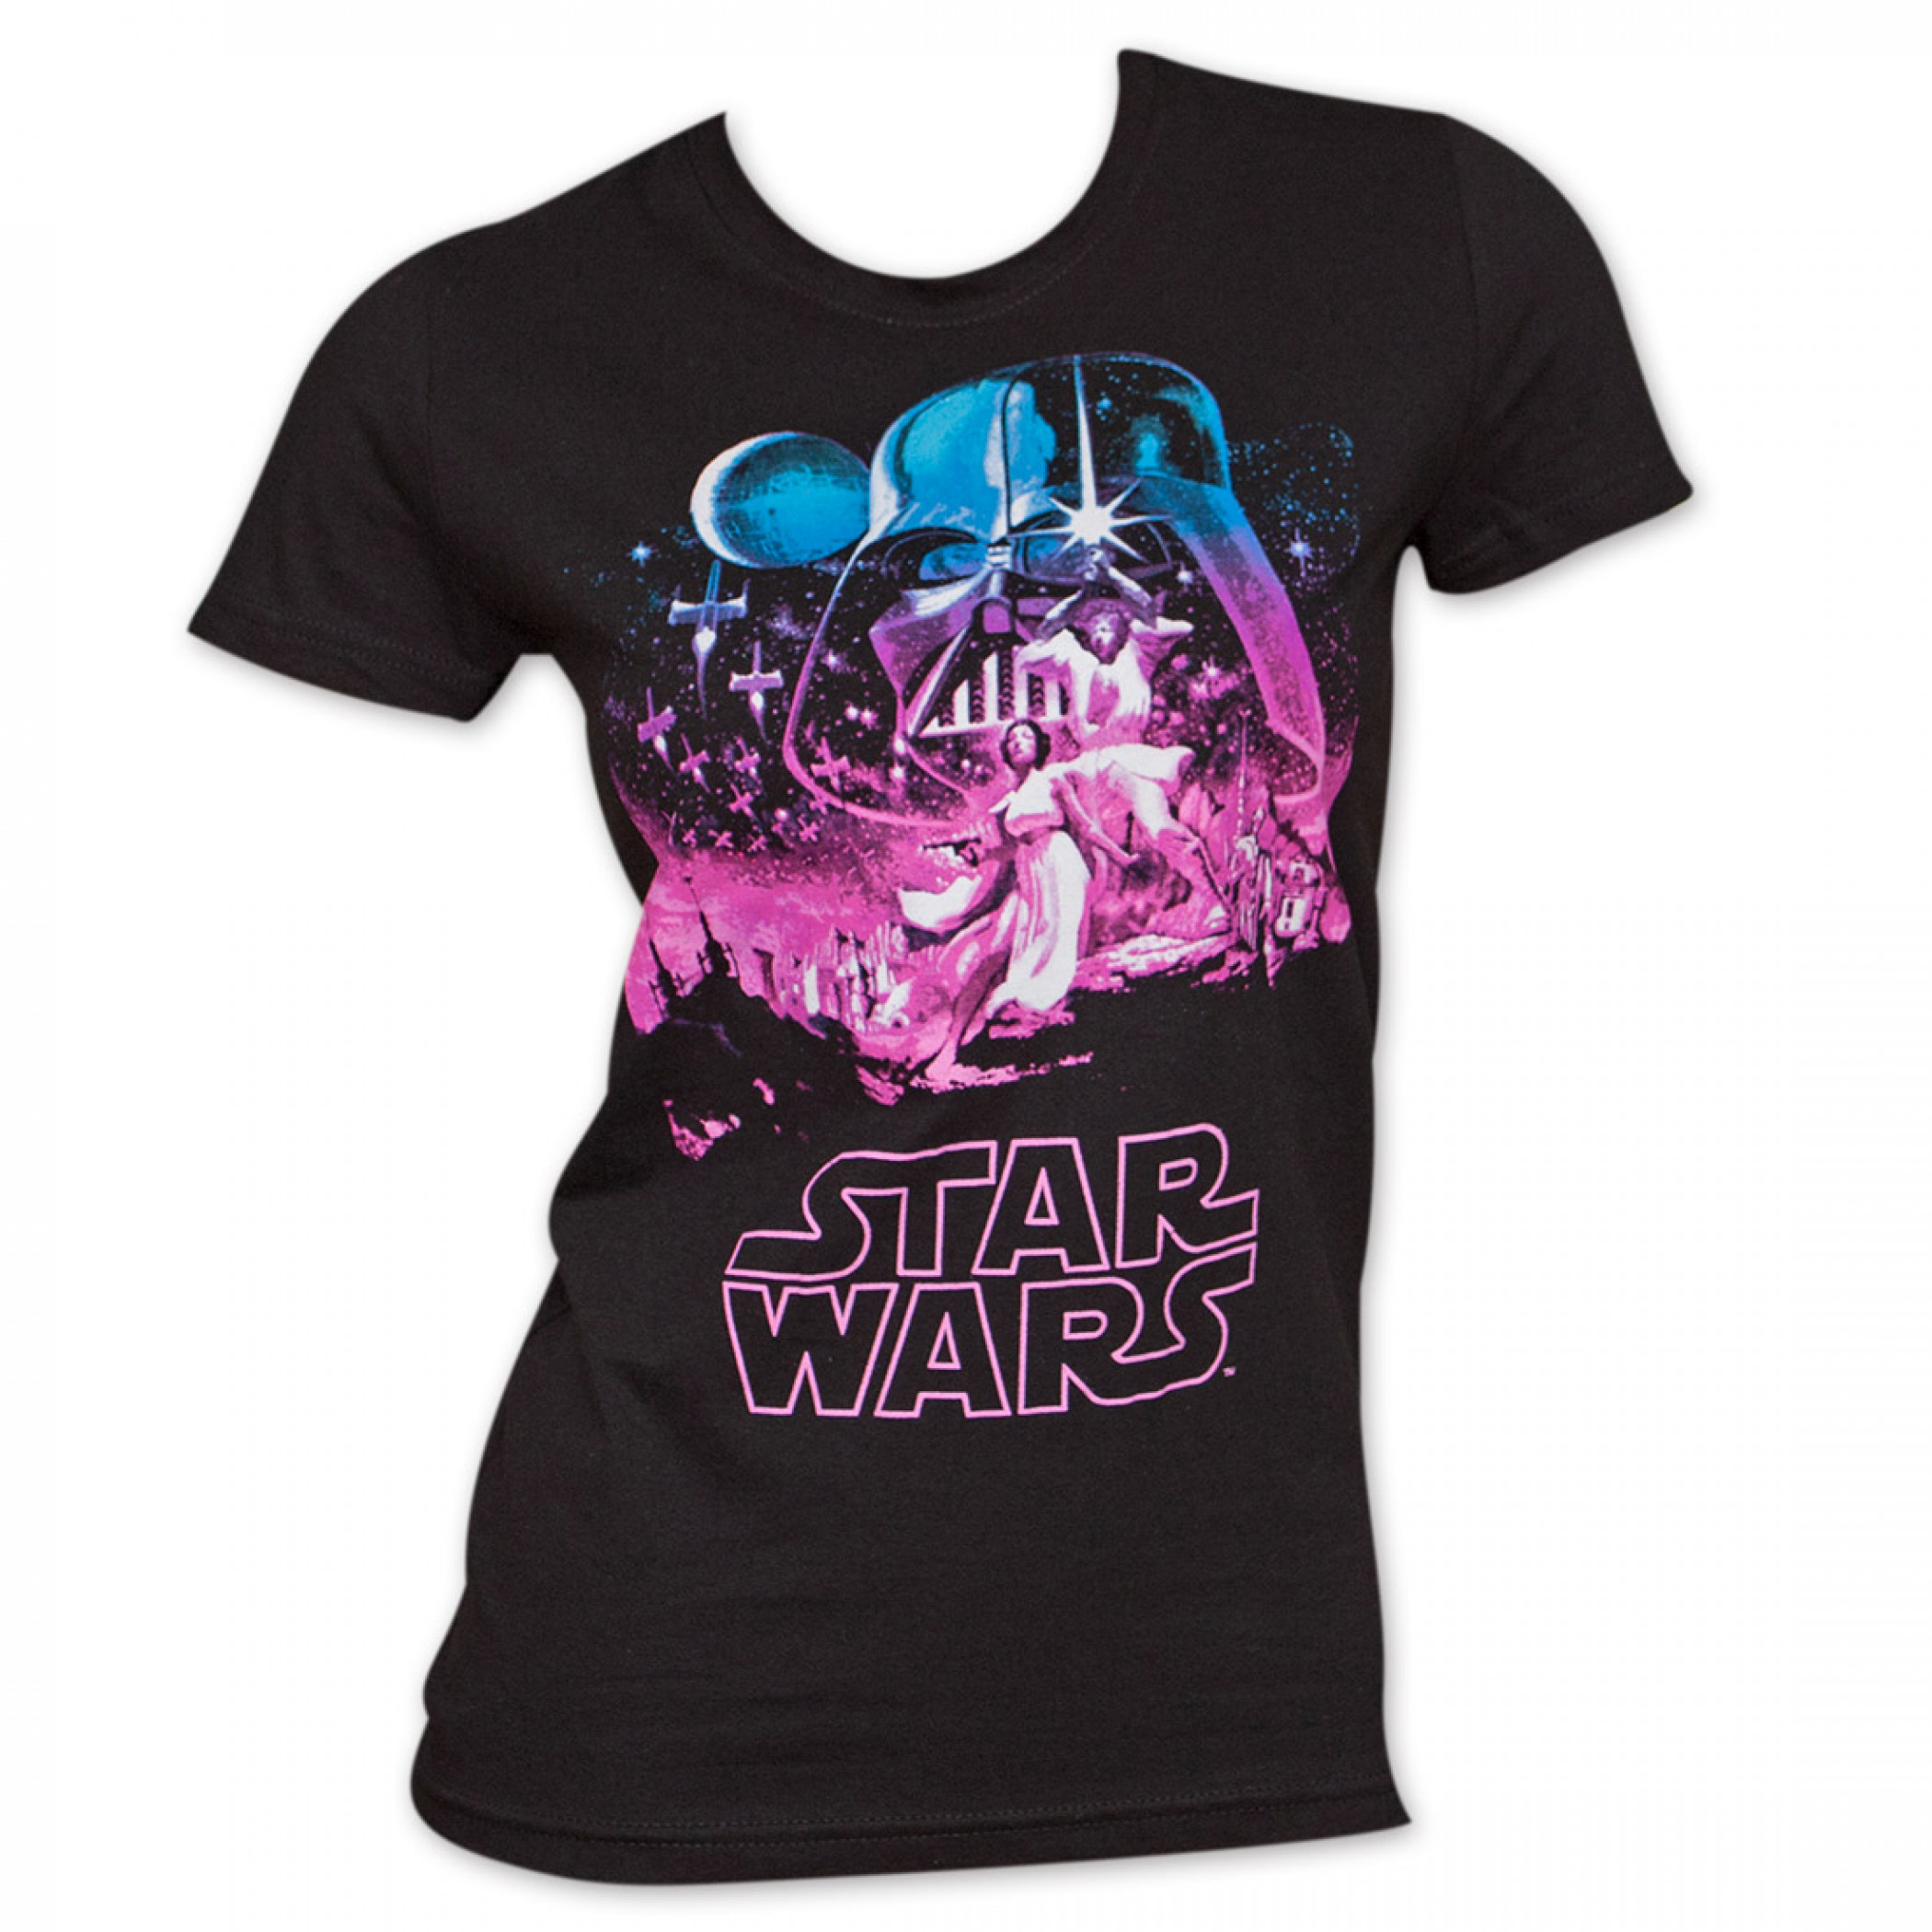 Star Wars Empire Strikes Back Women's Shirt